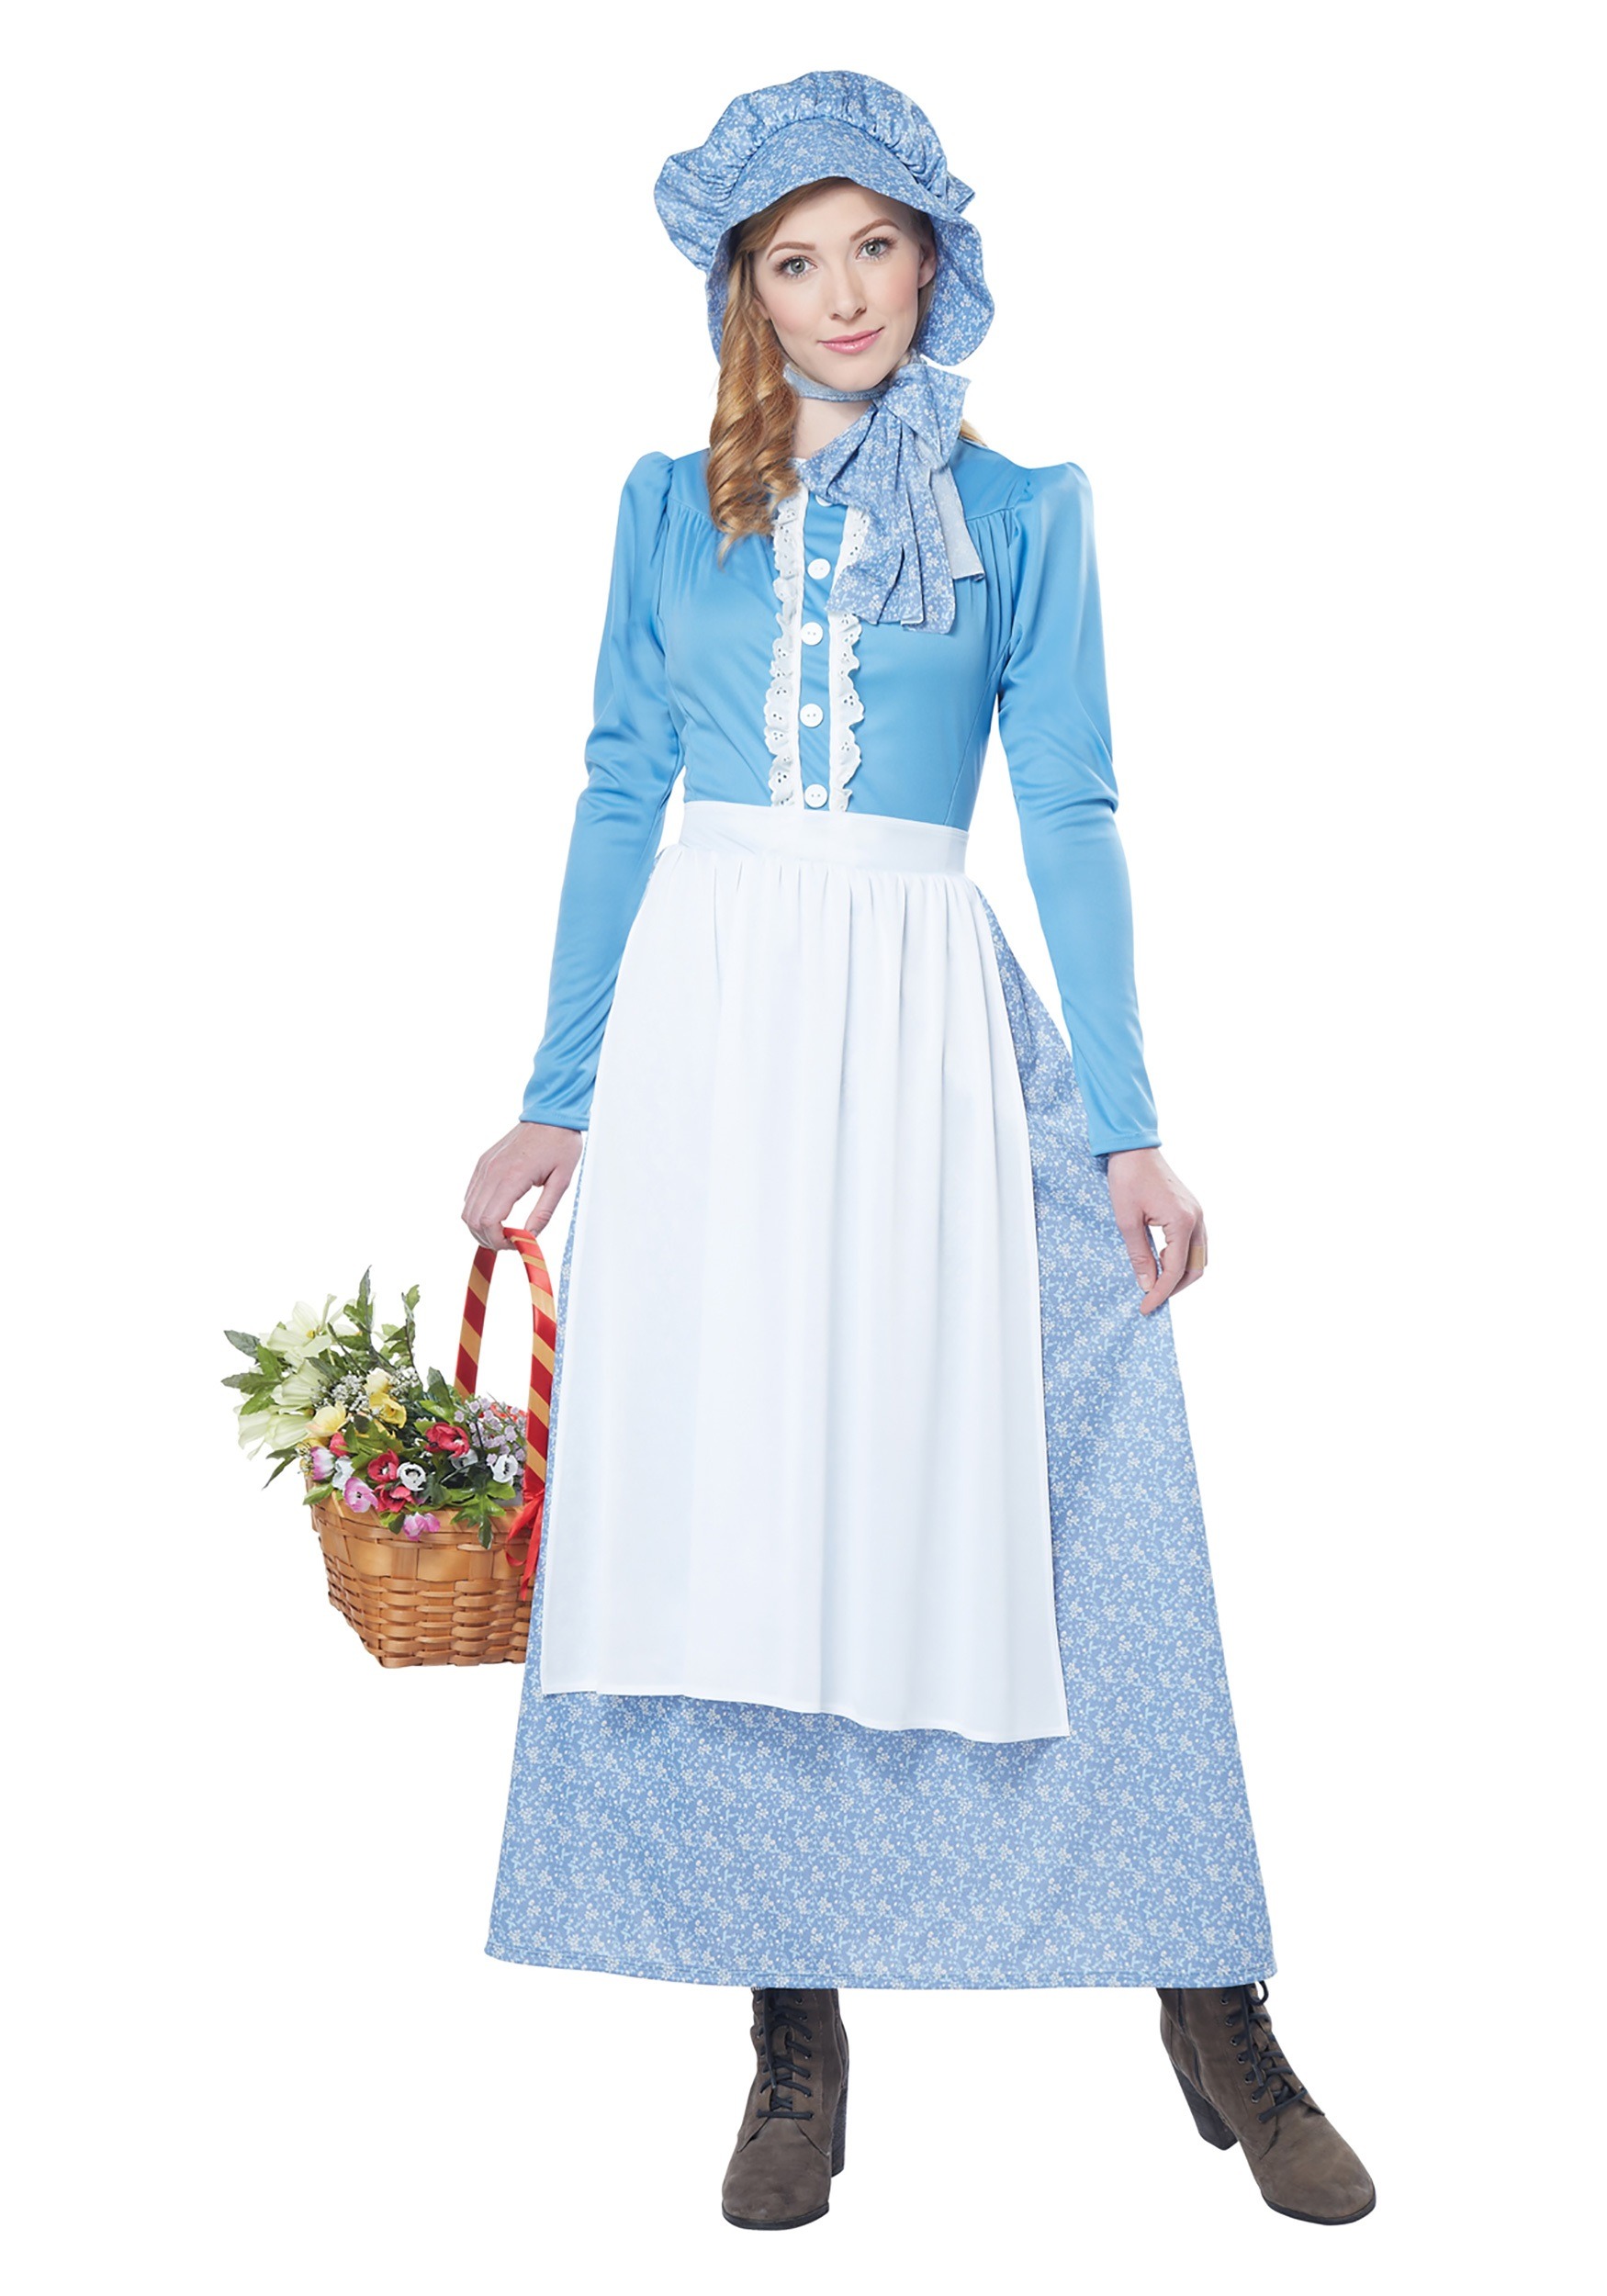 Adult Pioneer Woman Fancy Dress Costume